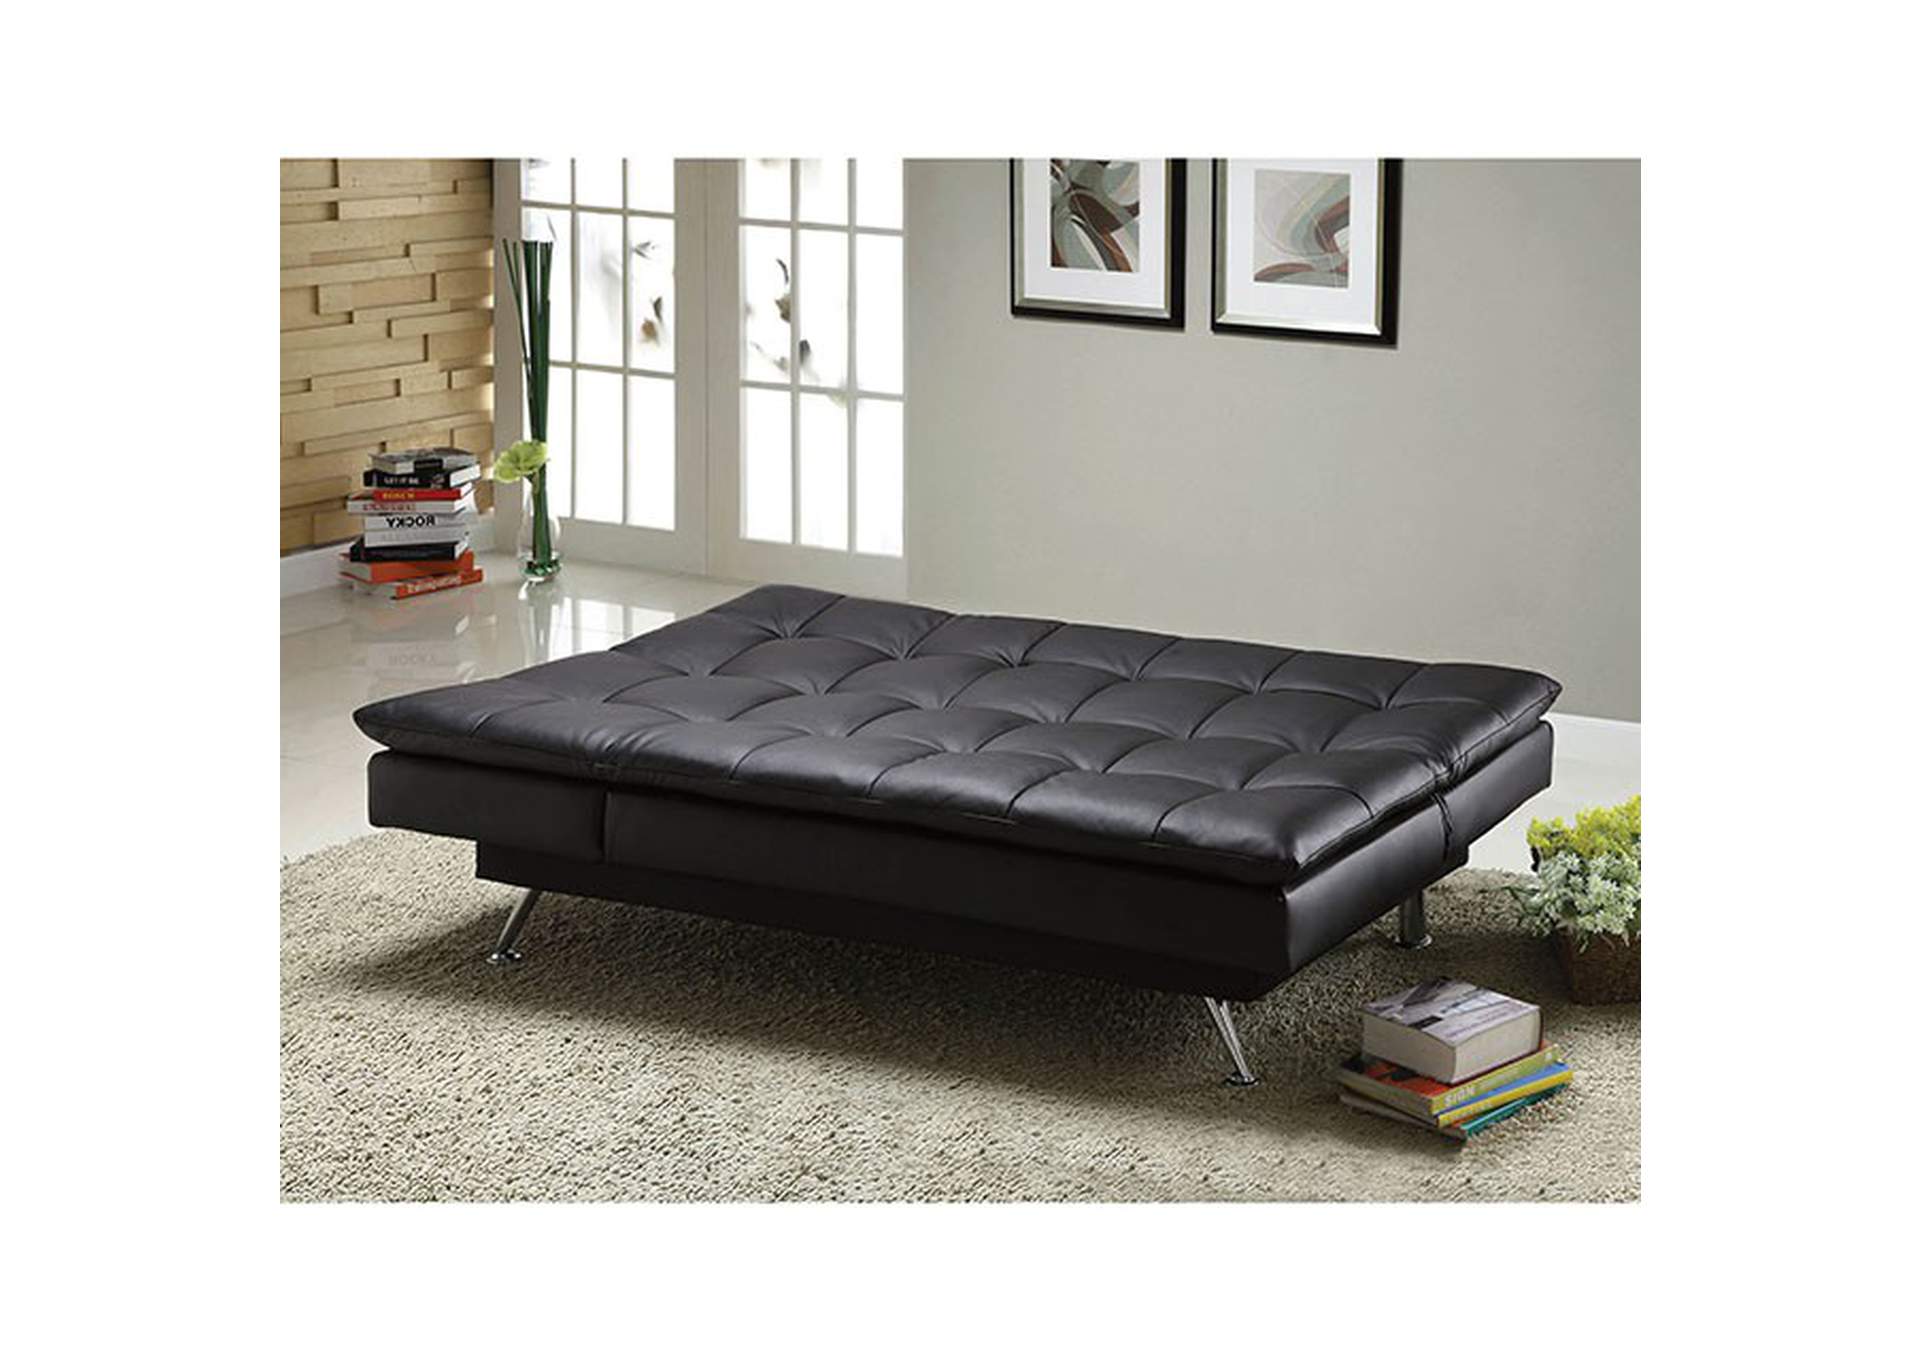 Hasty Black Futon Sofa,Furniture of America